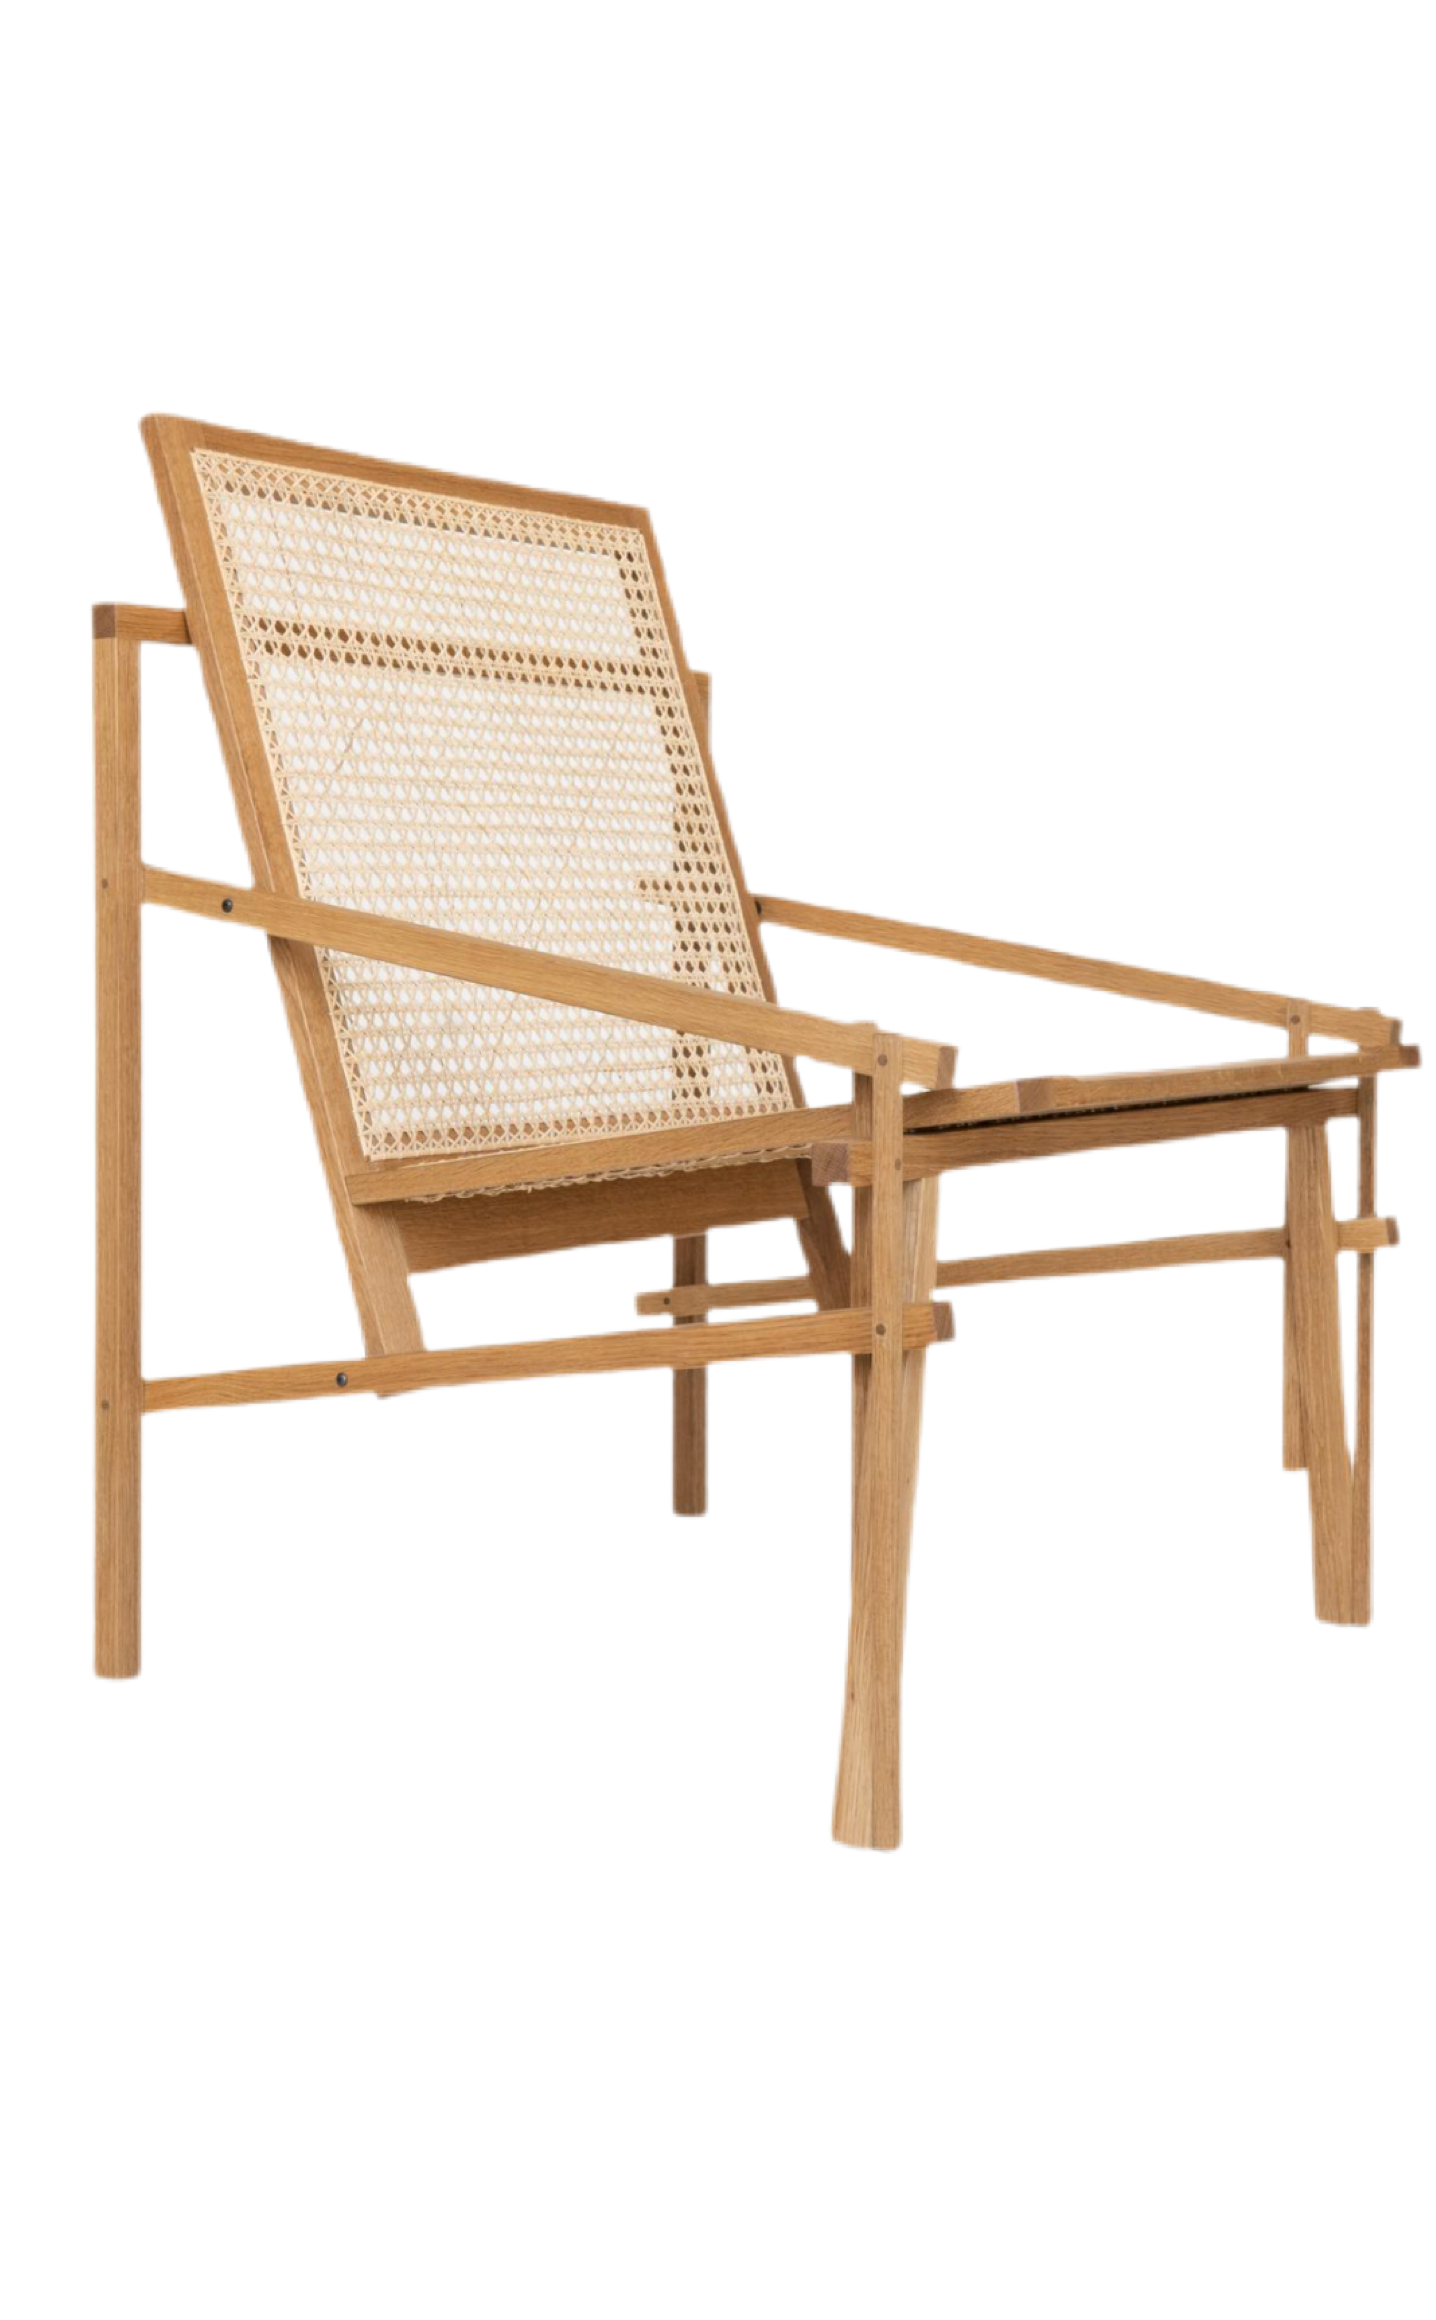 Hand-caned easy chair, white oak, Beech Boy Furniture